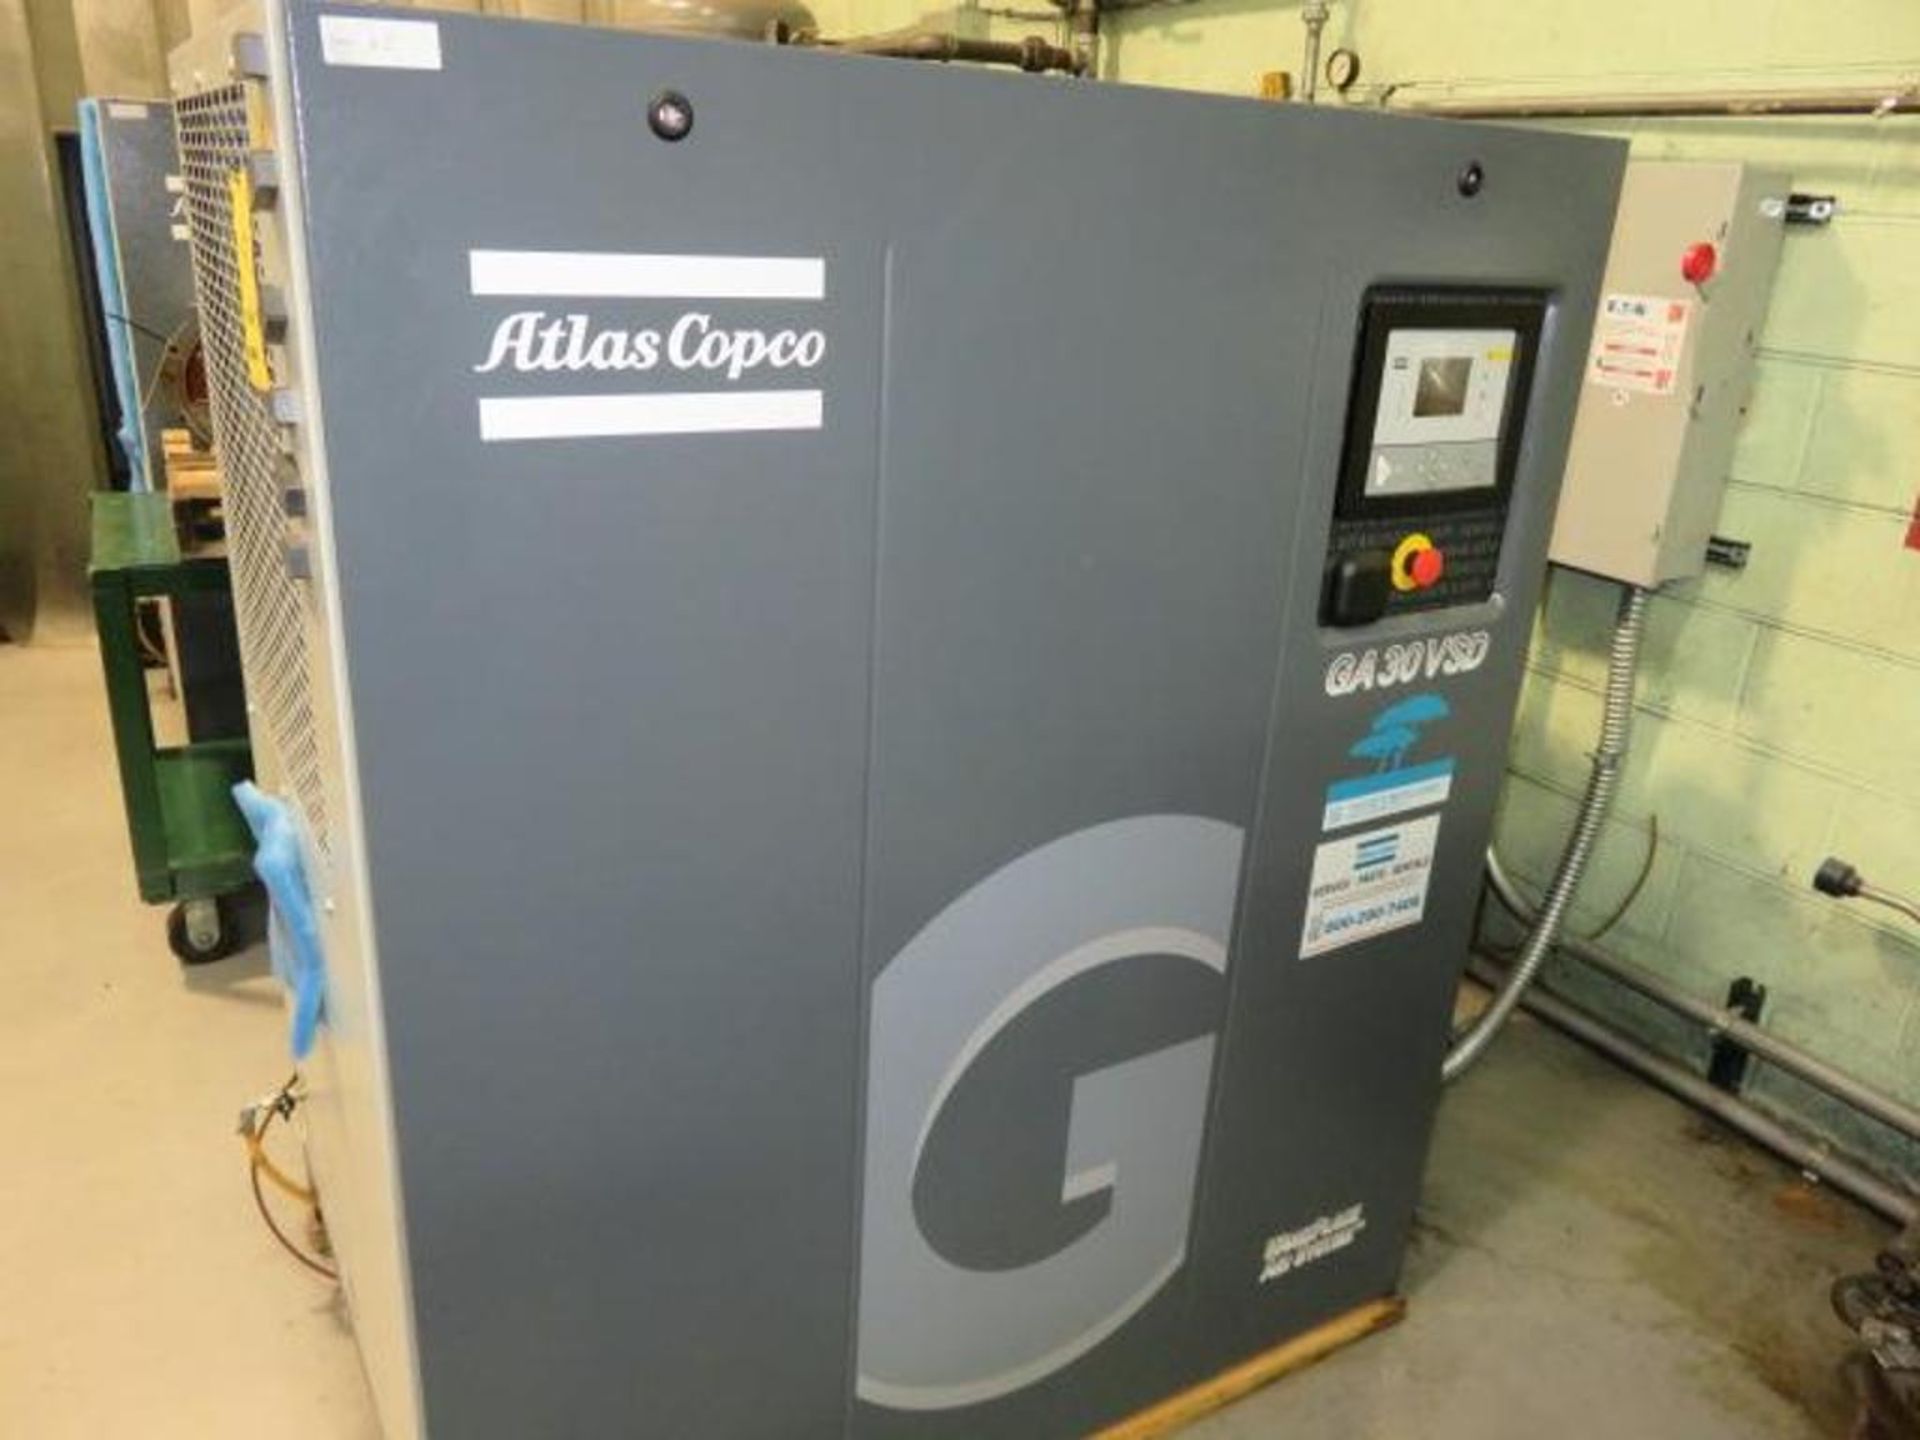 Atlas Copco 40 HP Variable Speed Drive Rotary Screw Air Compressor Model GA30VSD, S/N AP1435226 (201